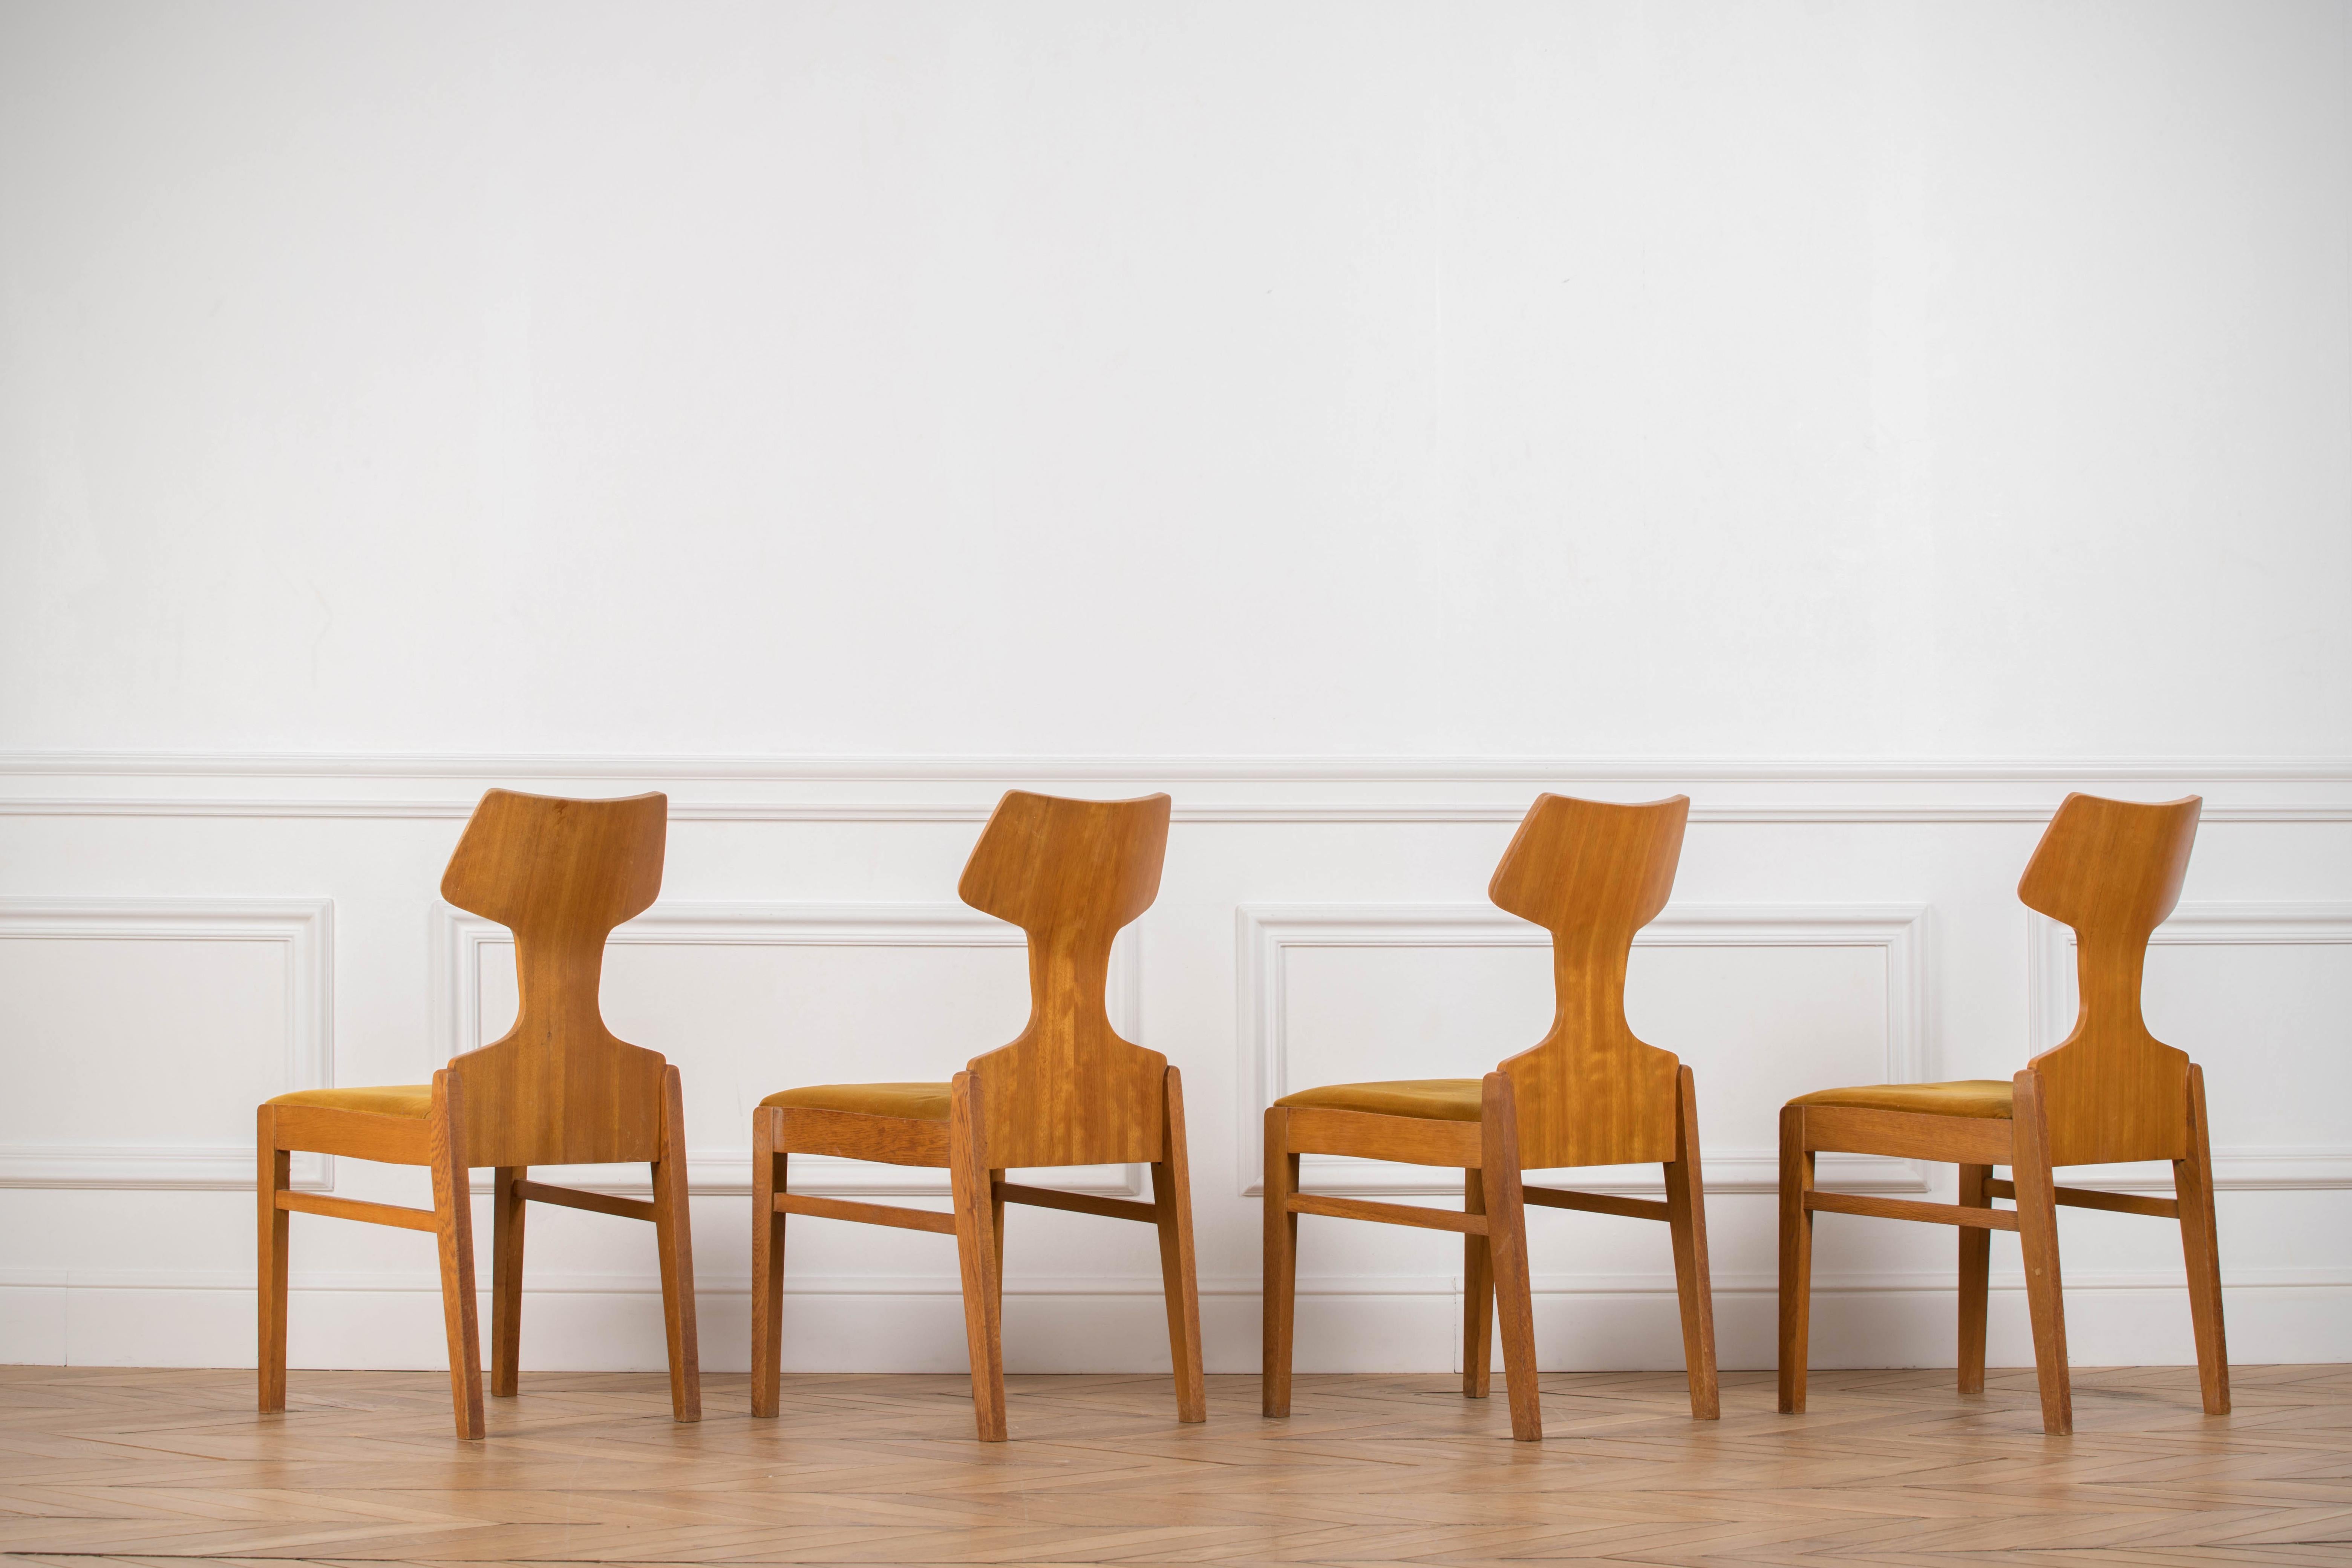 English Retro Chairs Scandinavian Design 1960s by Alphons Loebenstein